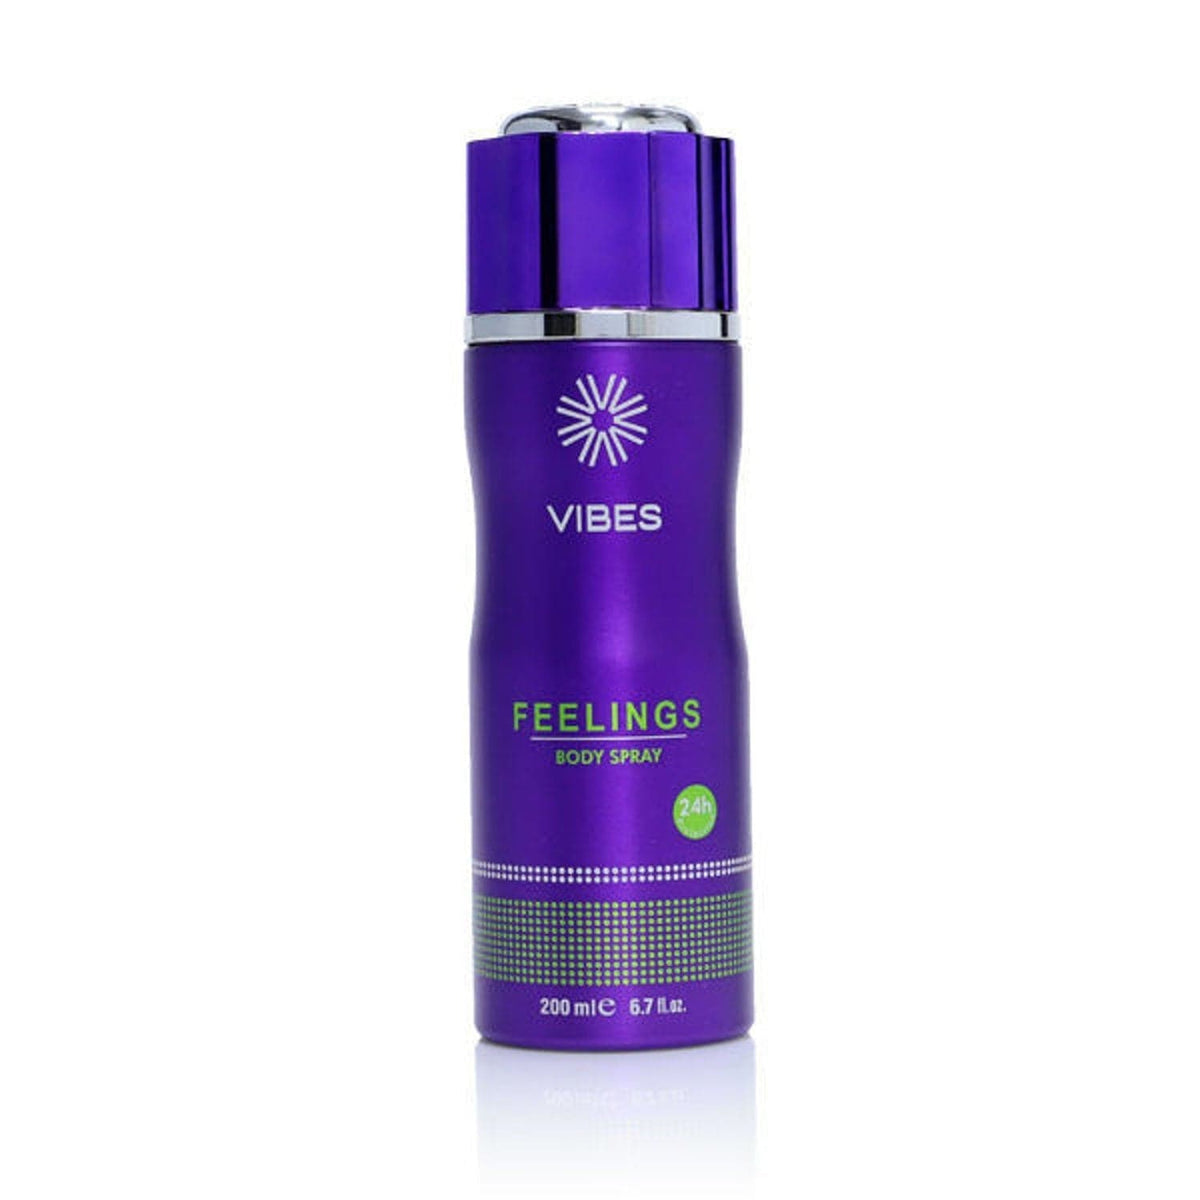 Hemani Vibes Body Spray - Feelings - Premium  from Hemani - Just Rs 440.00! Shop now at Cozmetica